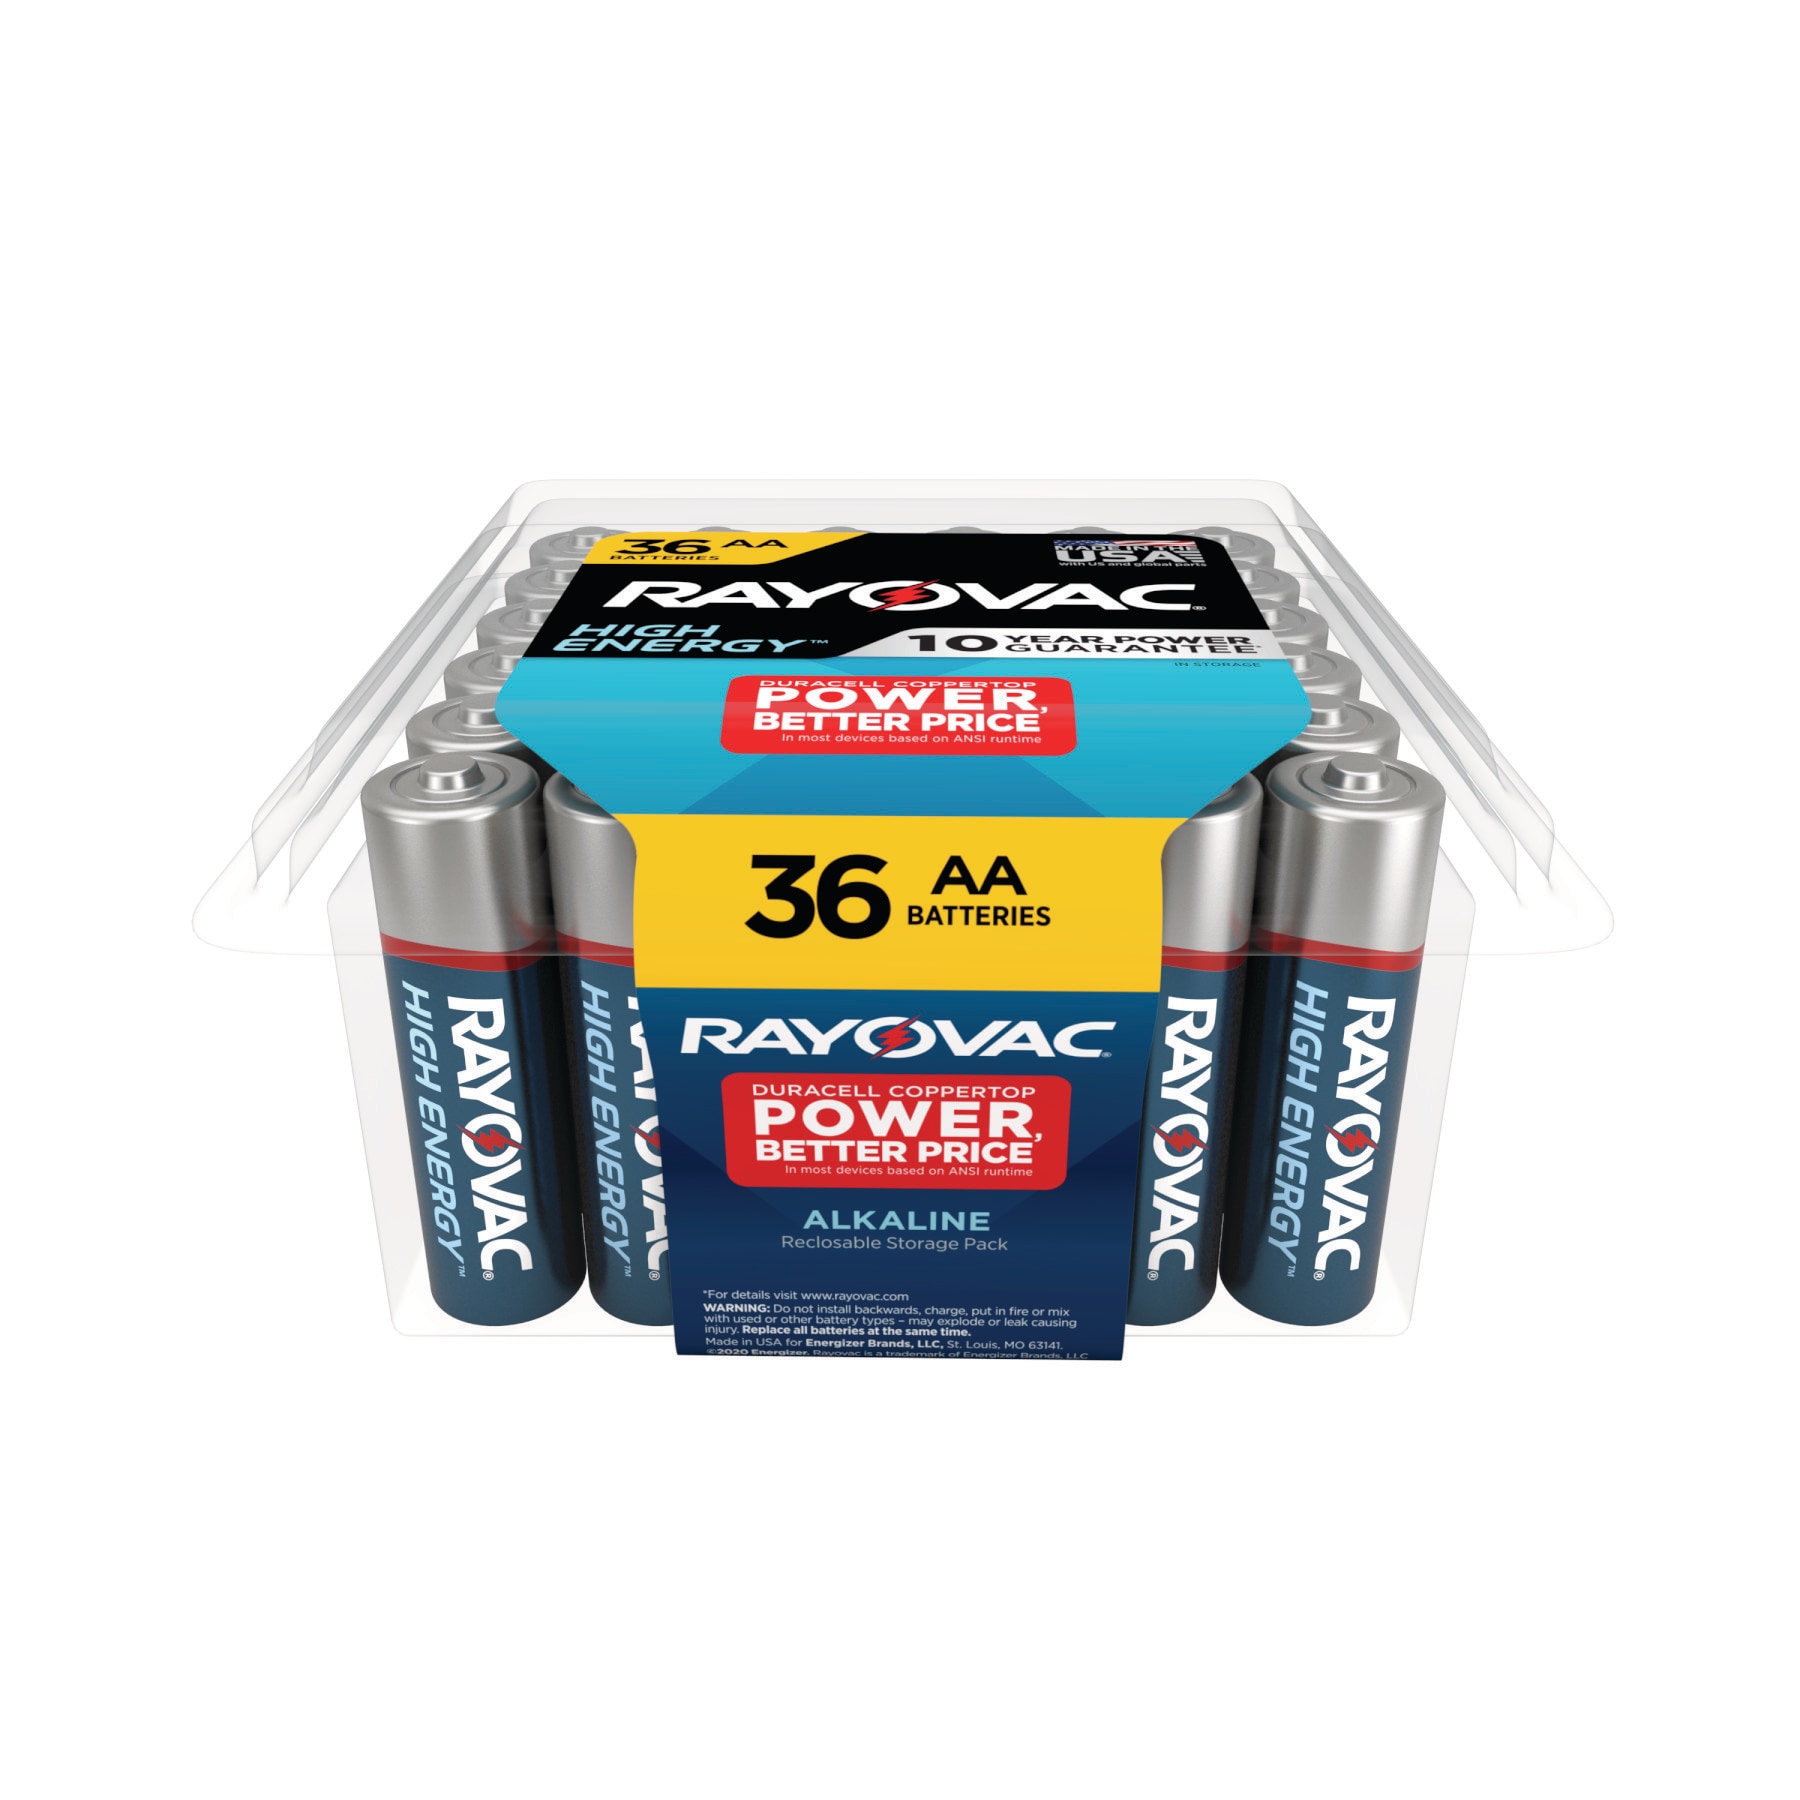   Basics 36-Pack AA Alkaline High-Performance Batteries,  1.5 Volt, 10-Year Shelf Life : Health & Household